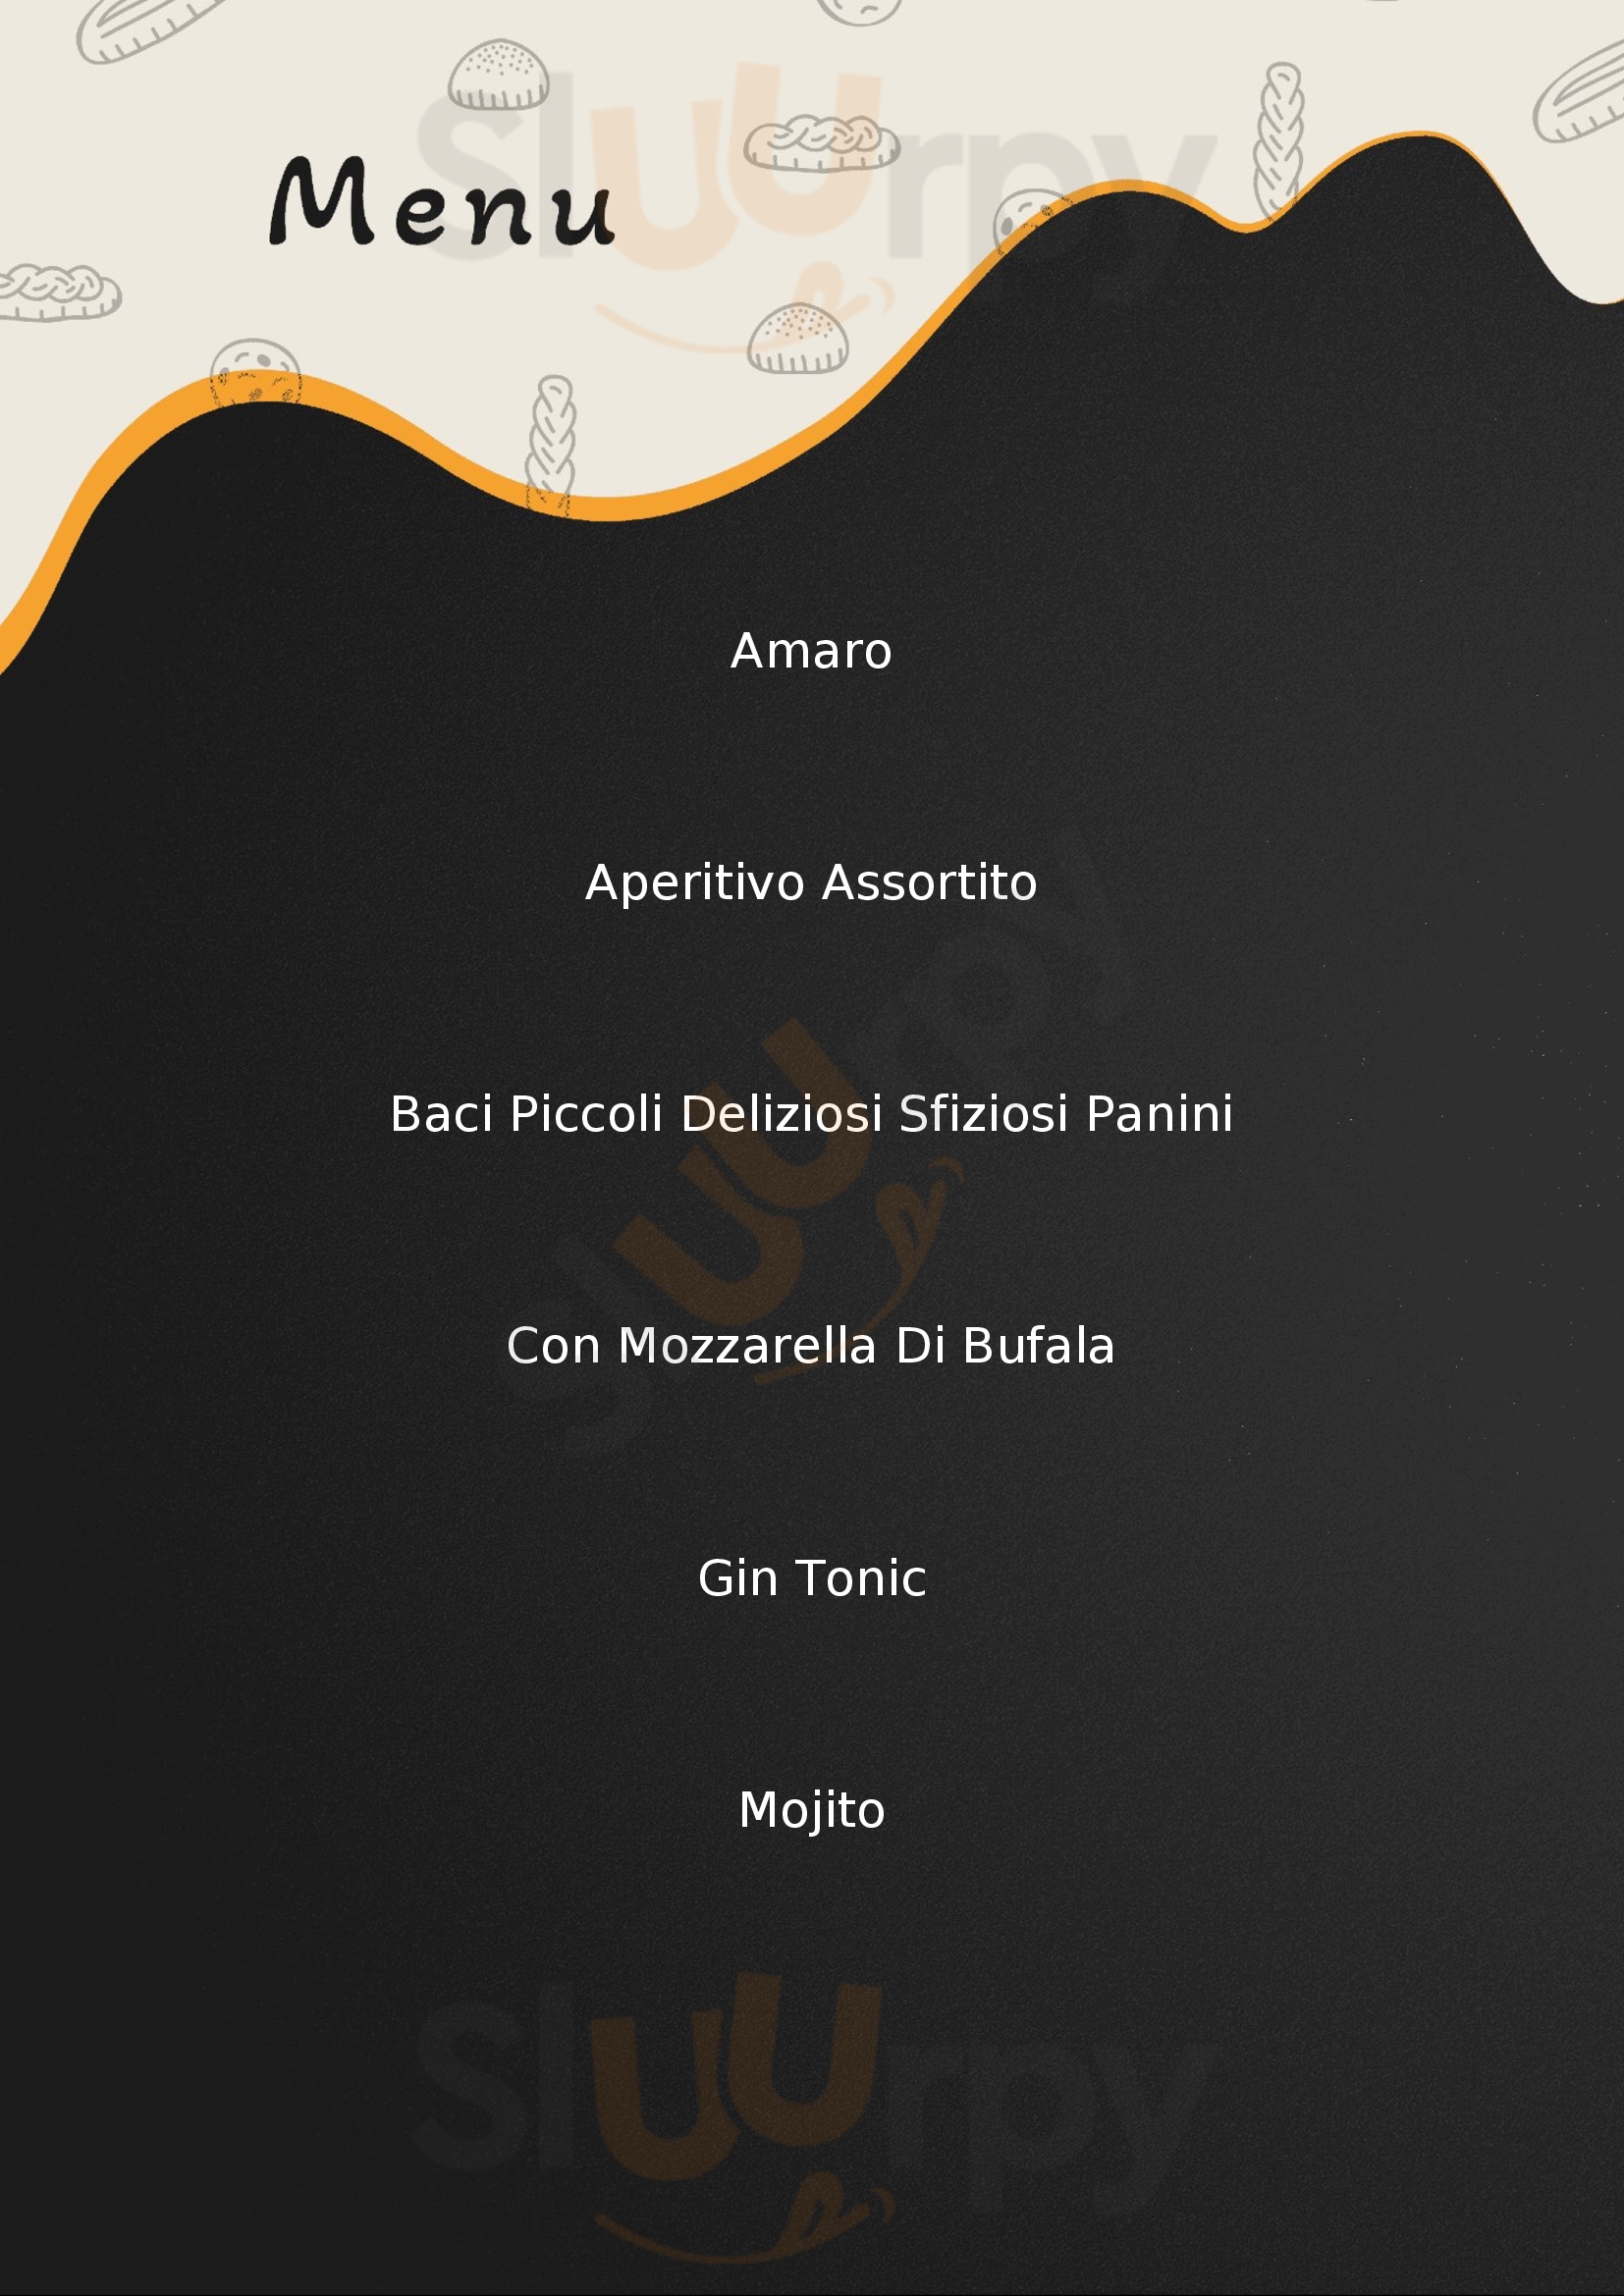 Malti & Mosti Roma menù 1 pagina